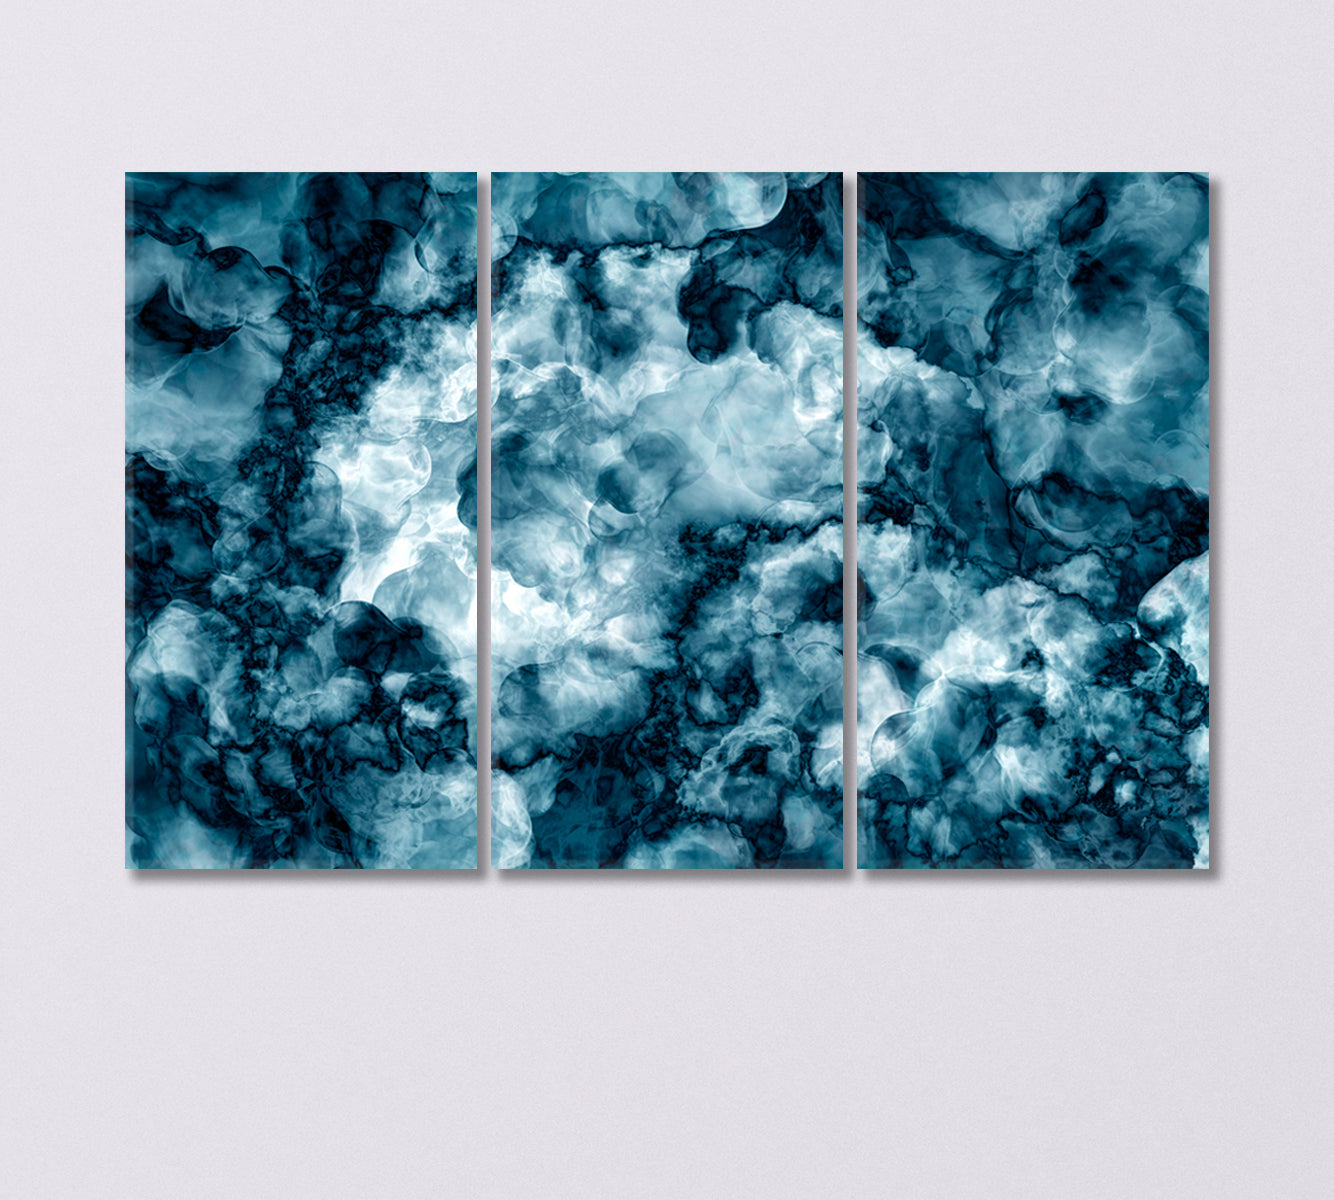 Abstract Dark Blue Dense Smoke Swirls Canvas Print-Canvas Print-CetArt-3 Panels-36x24 inches-CetArt